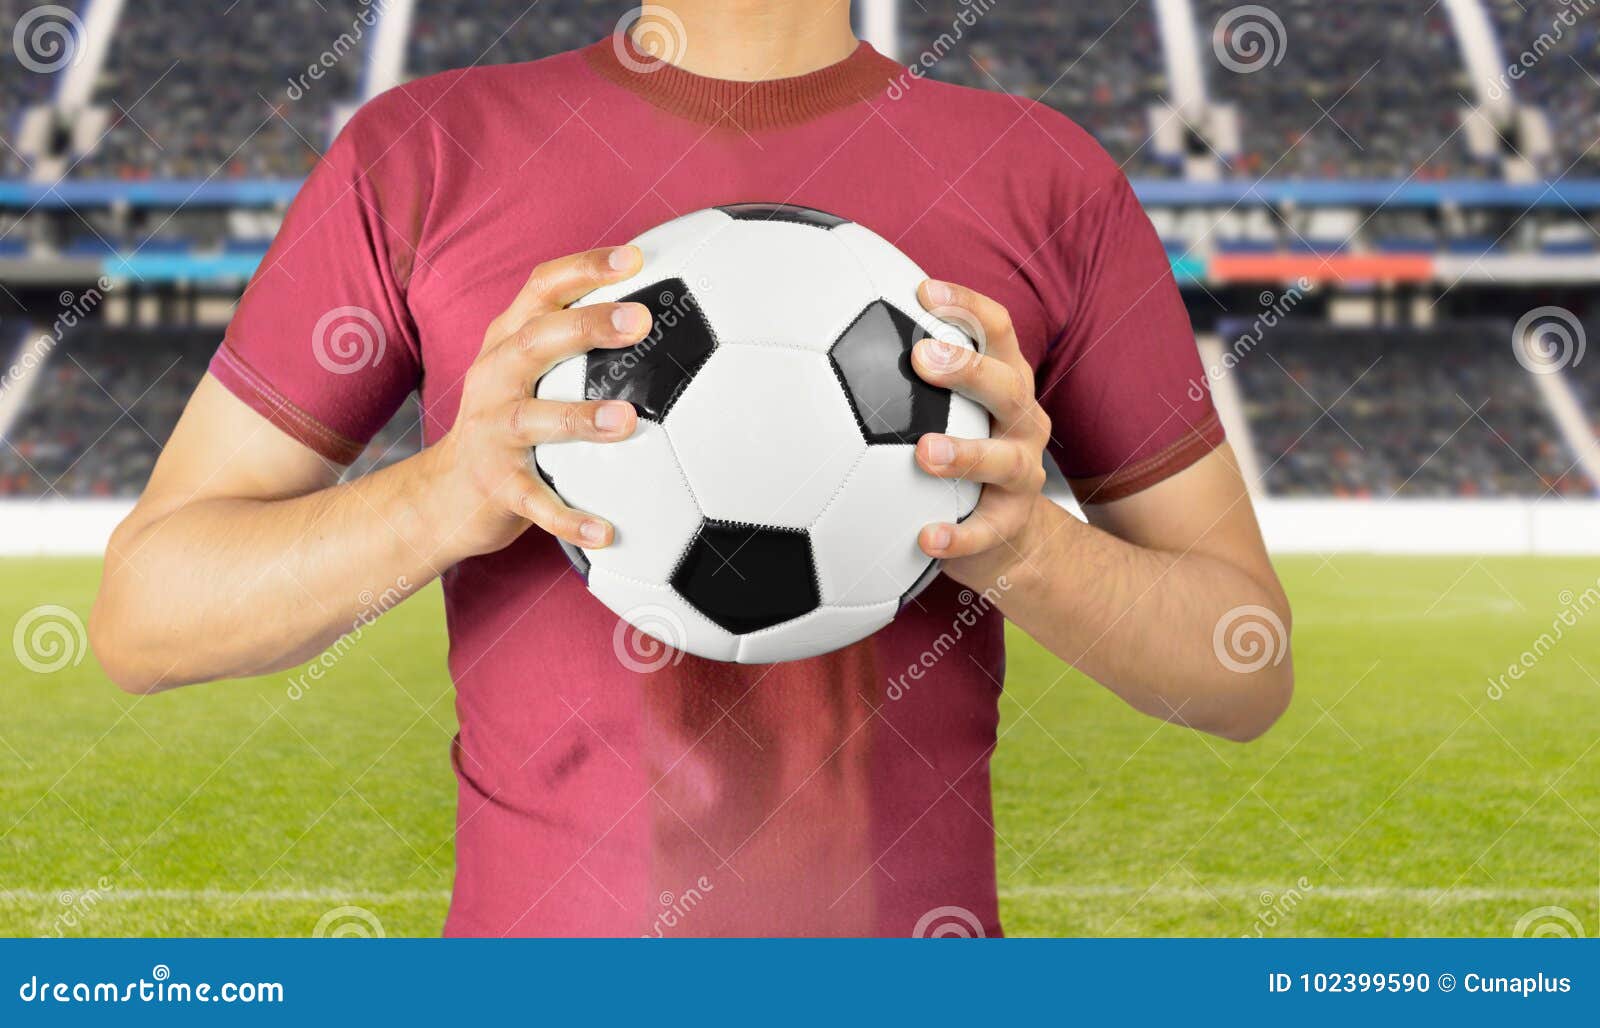 Футболист держит мяч. Футболист держит мяч в руках. Hold a Ball. Футболист с мячом в руках.